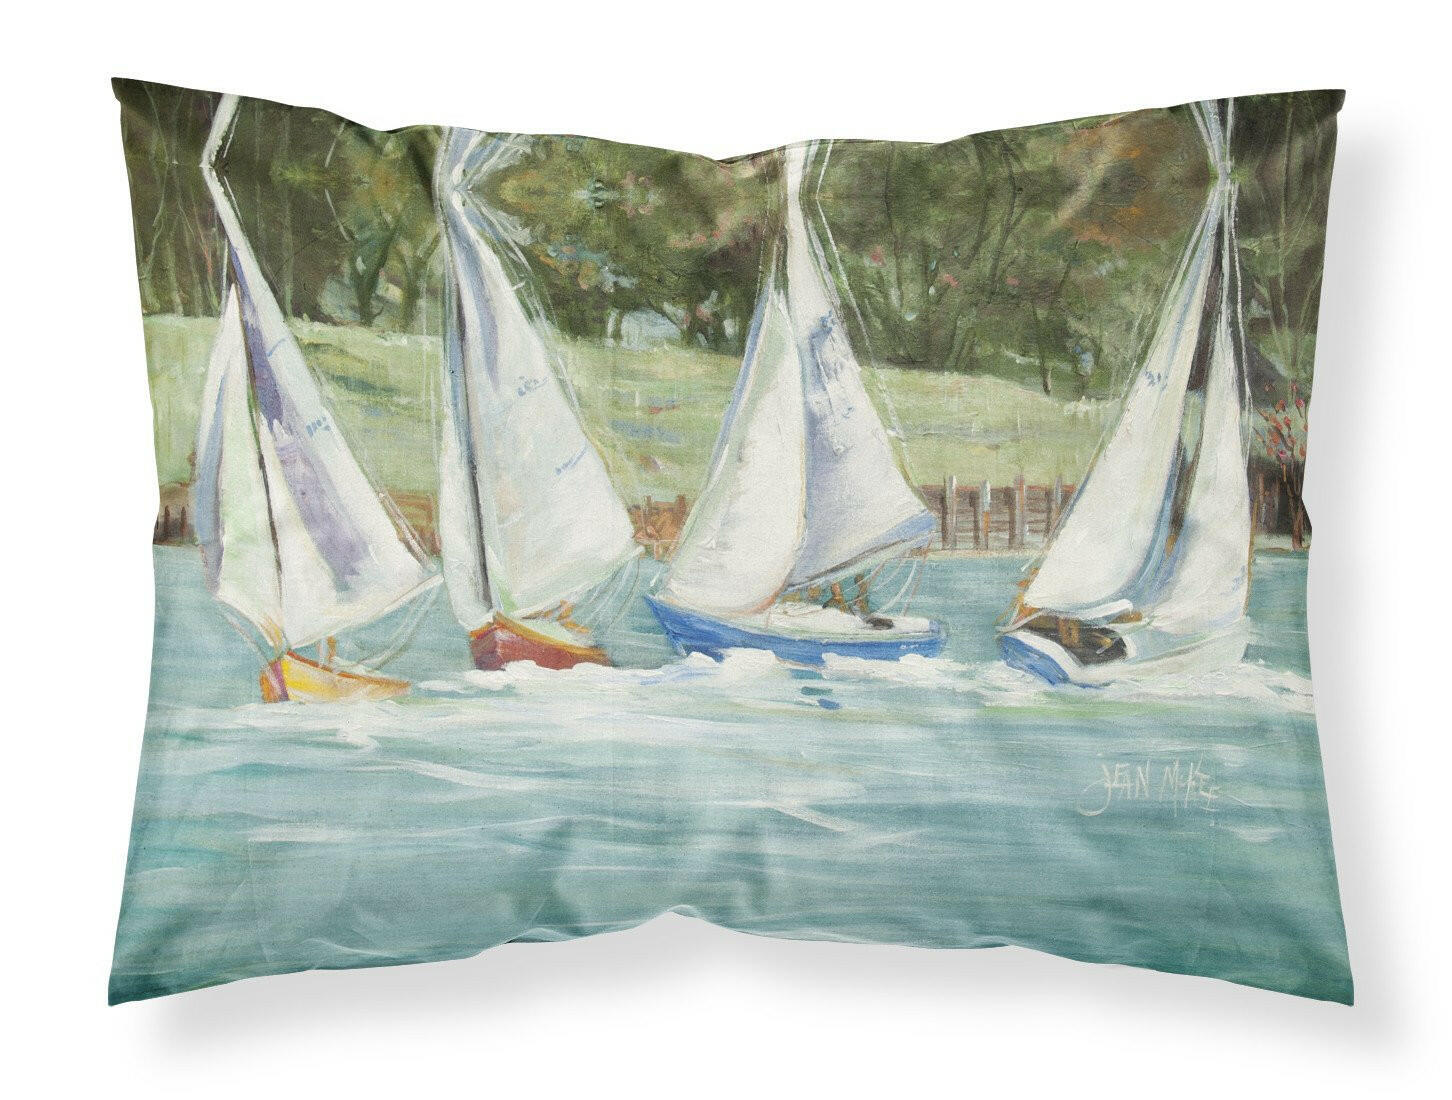 Sailboats on the bay Fabric Standard Pillowcase JMK1035PILLOWCASE by Caroline's Treasures